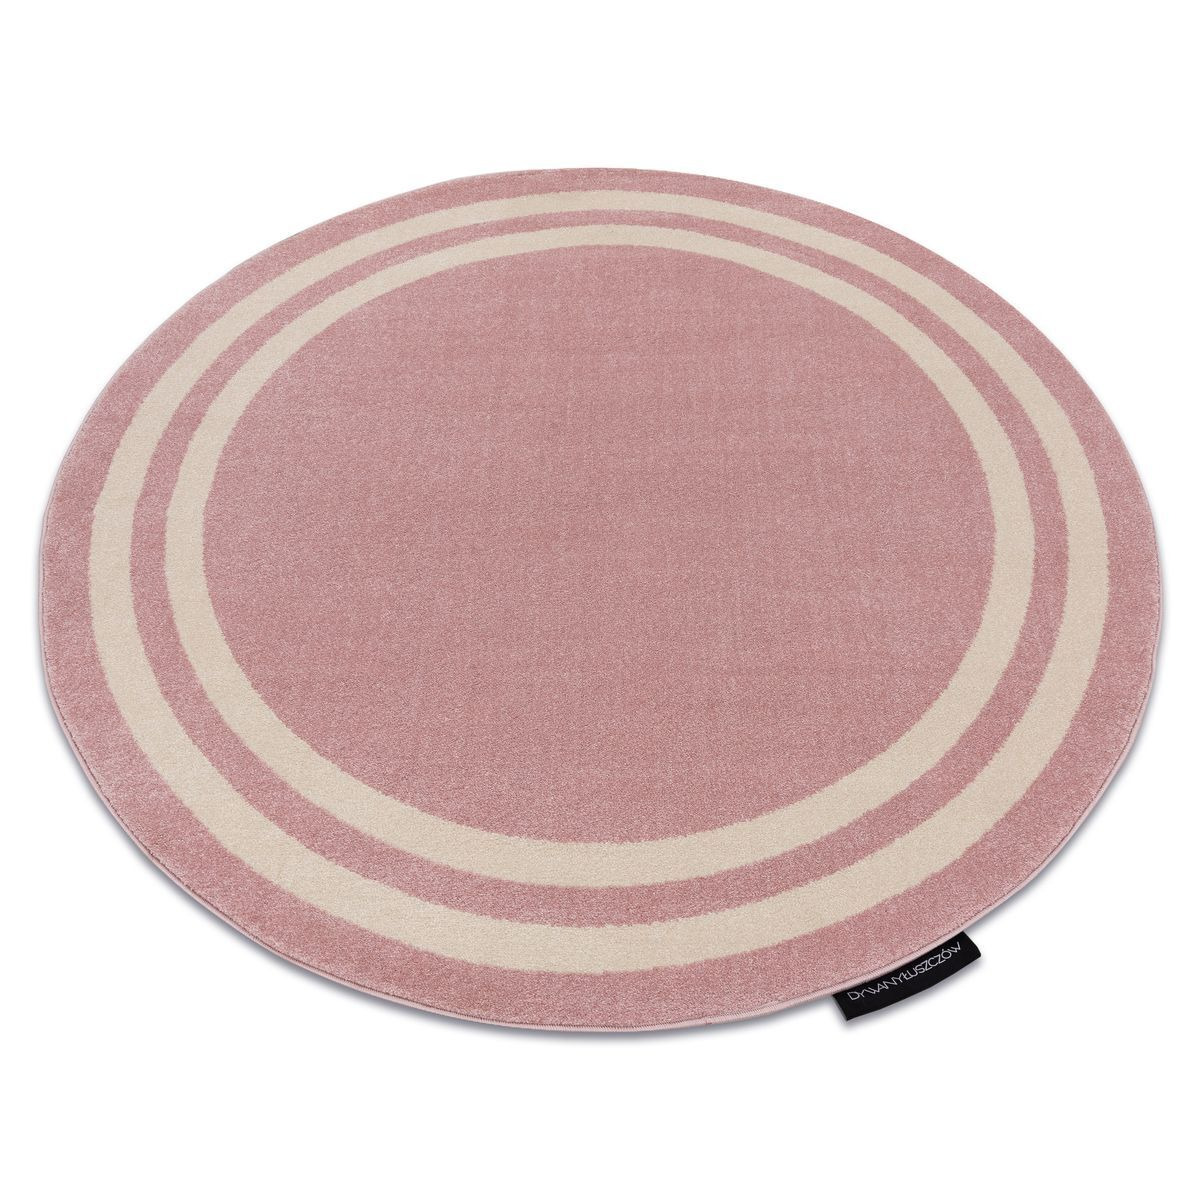 Cariol Cookaric Rug in Blush Pink, circle 140 cm - image 1